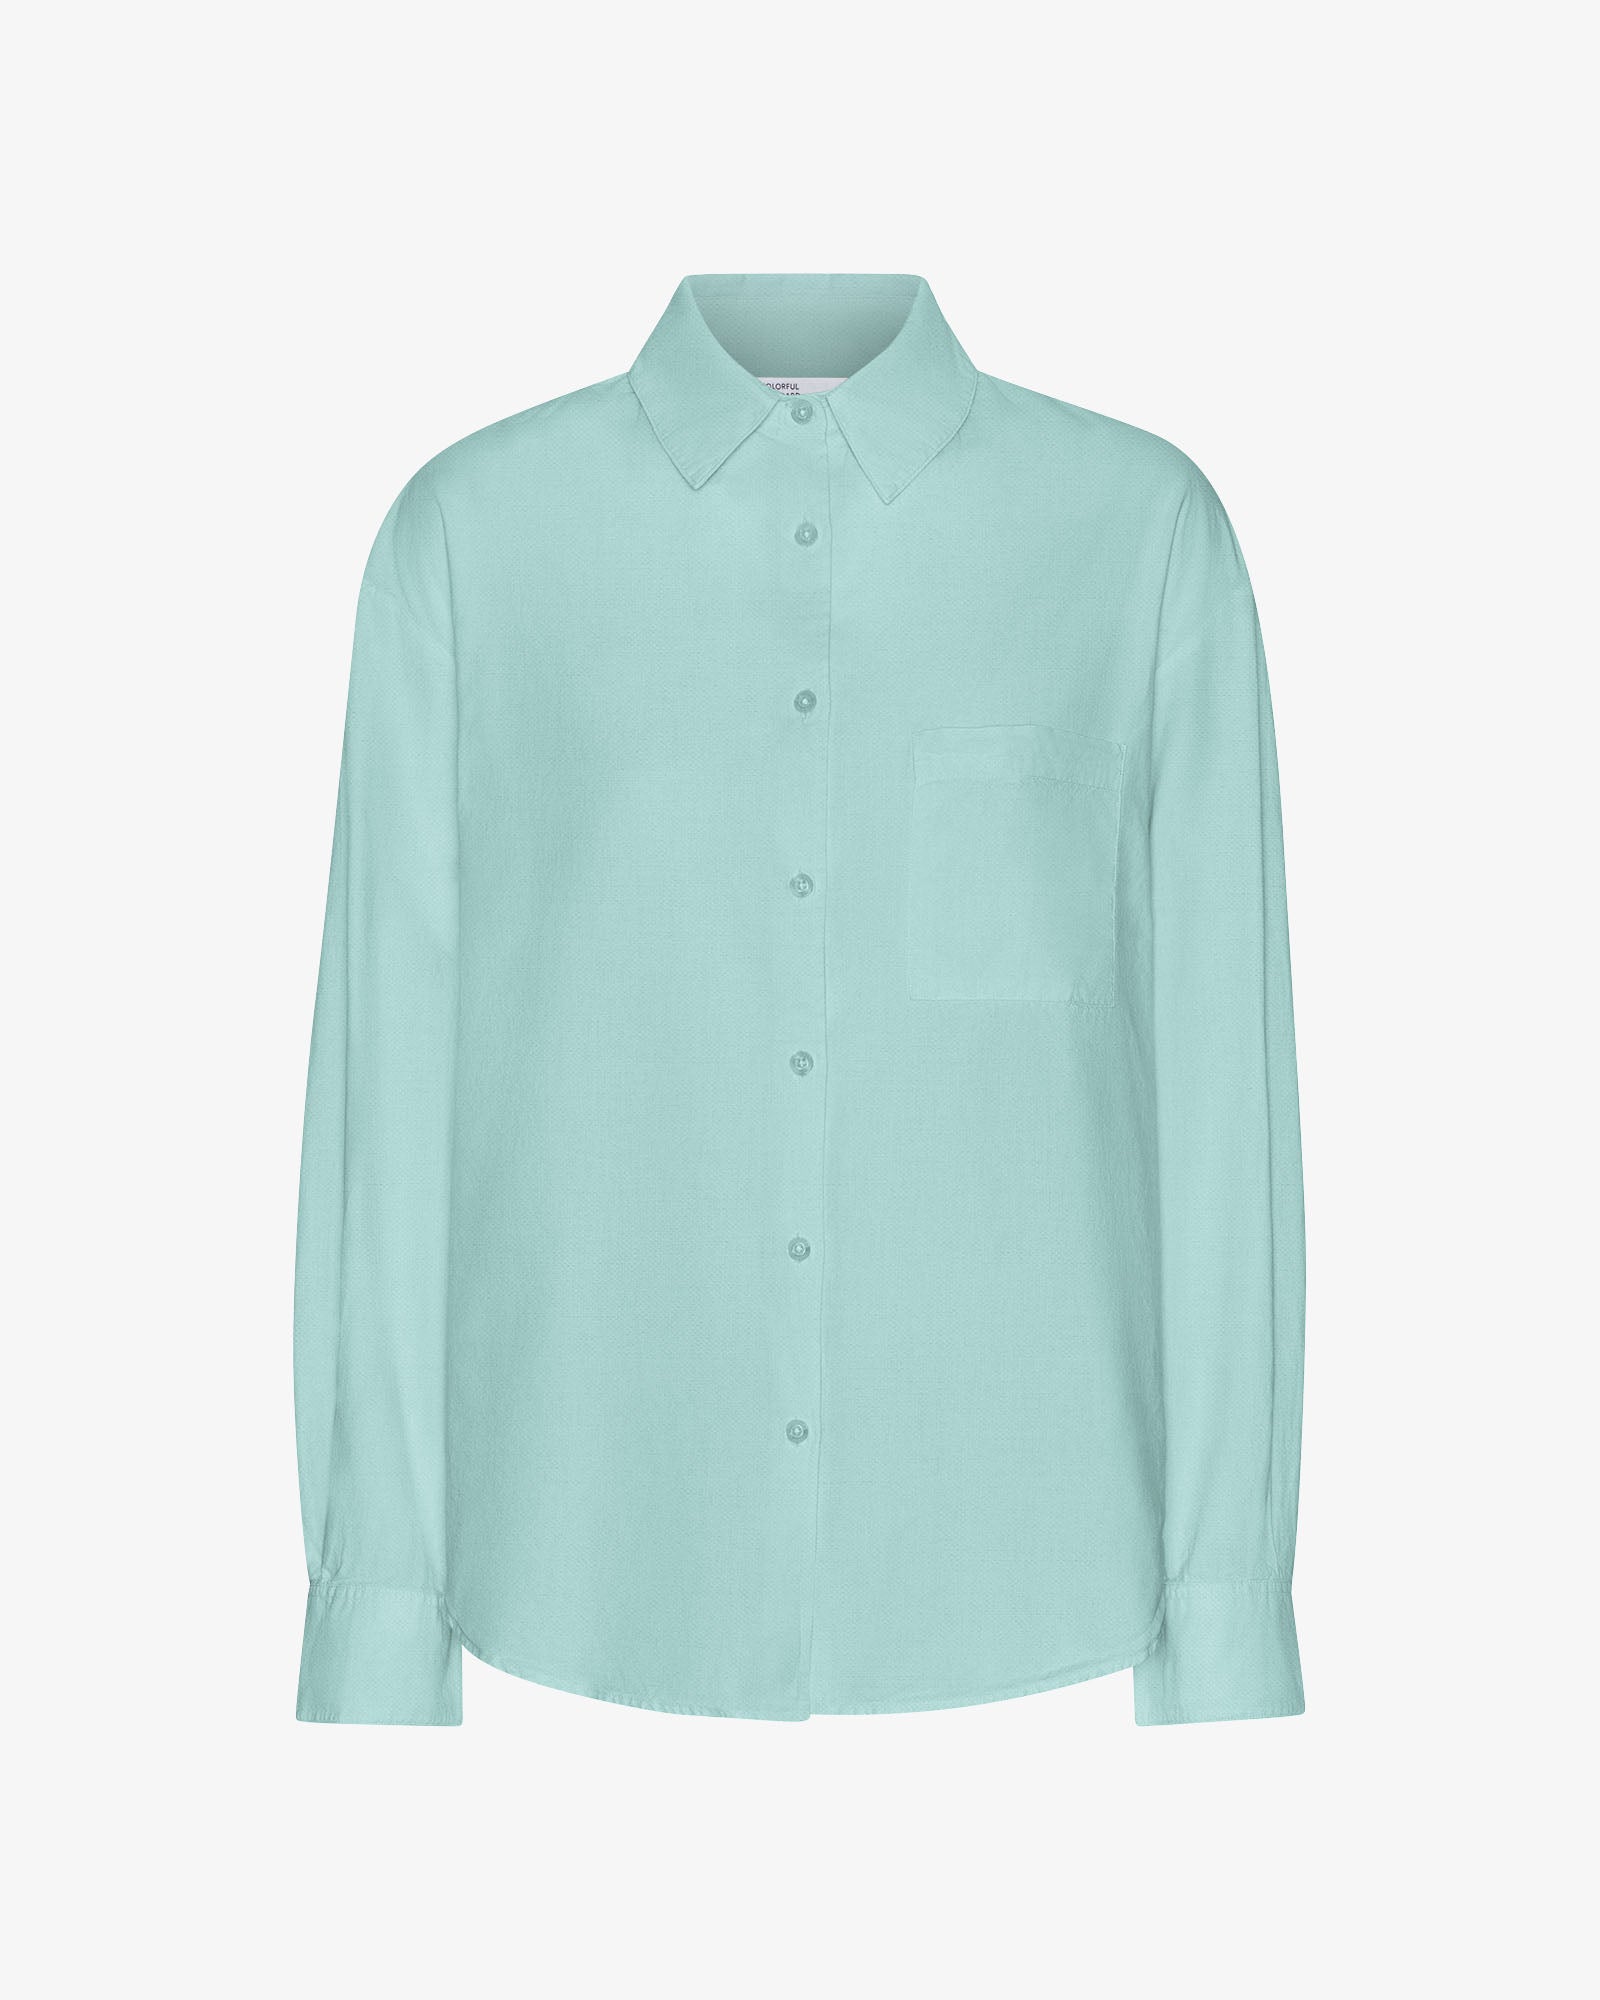 Organic Oversized Shirt - Teal Blue